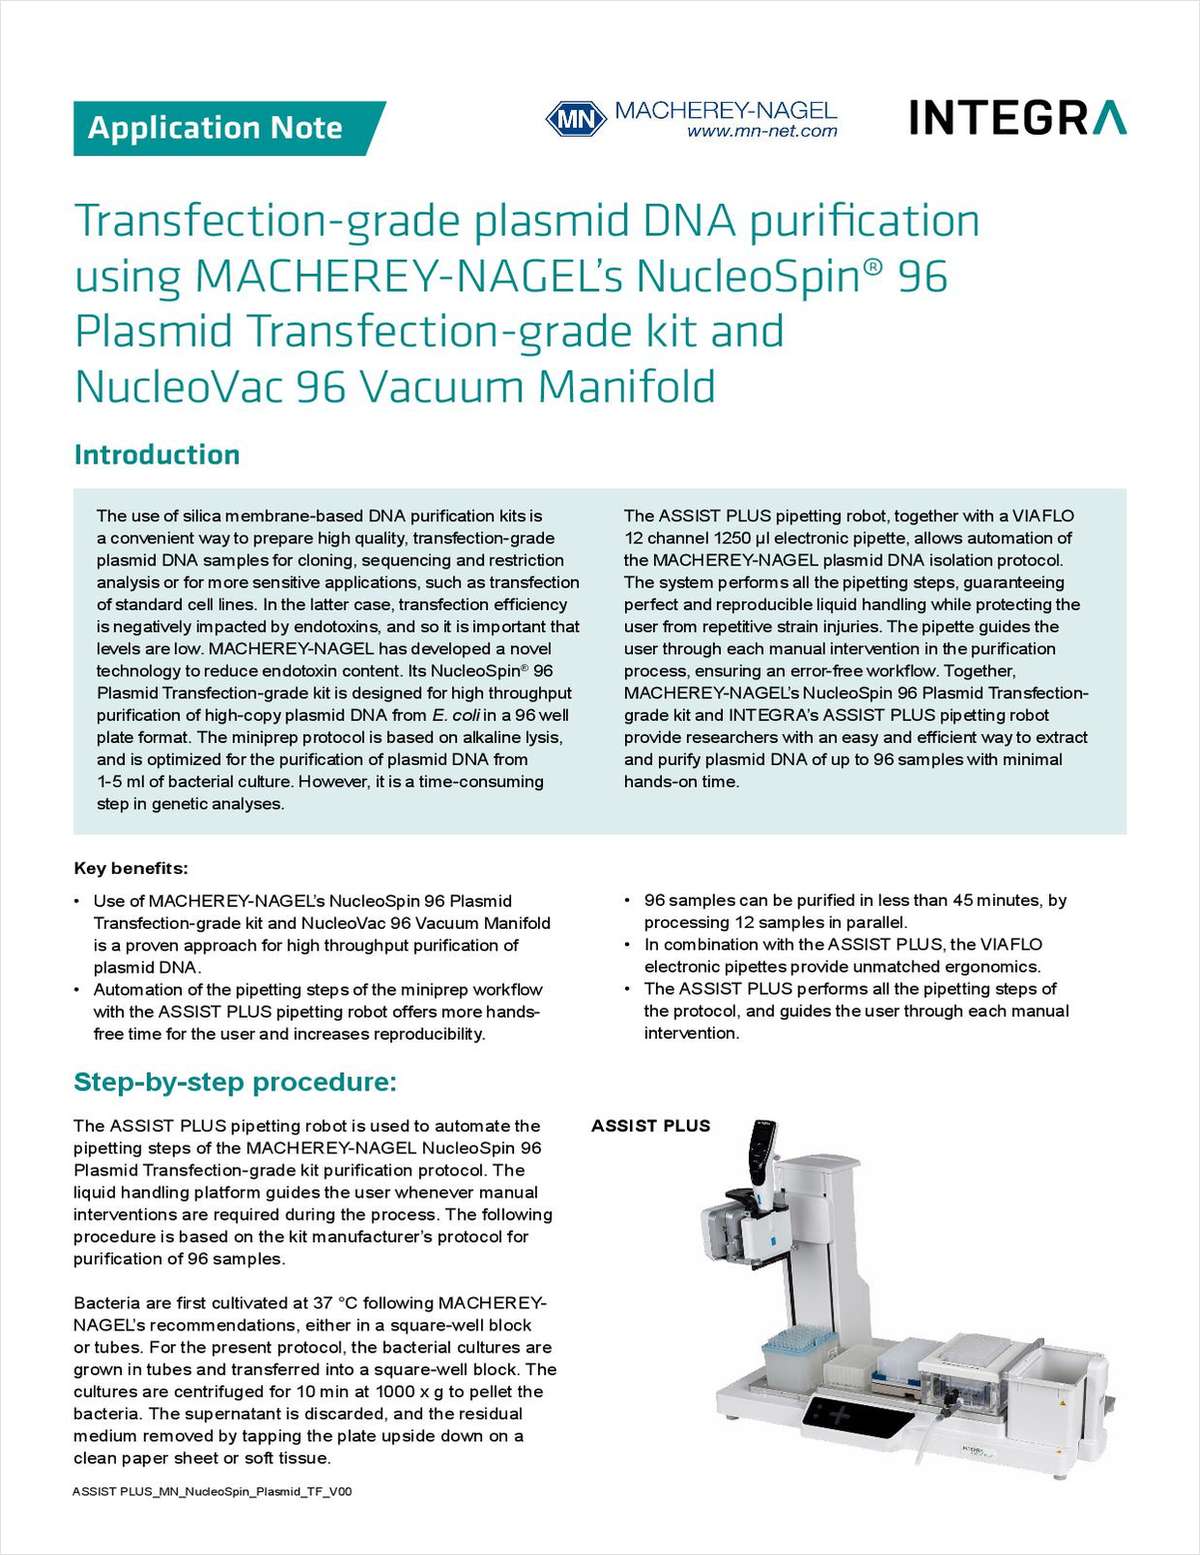 Transfection-Grade Plasmid DNA Purification Using Macherey-Nagel's NucleoSpin 96 Plasmid Transfection-Grade Kit and NucleoVac 96 Vacuum Manifold